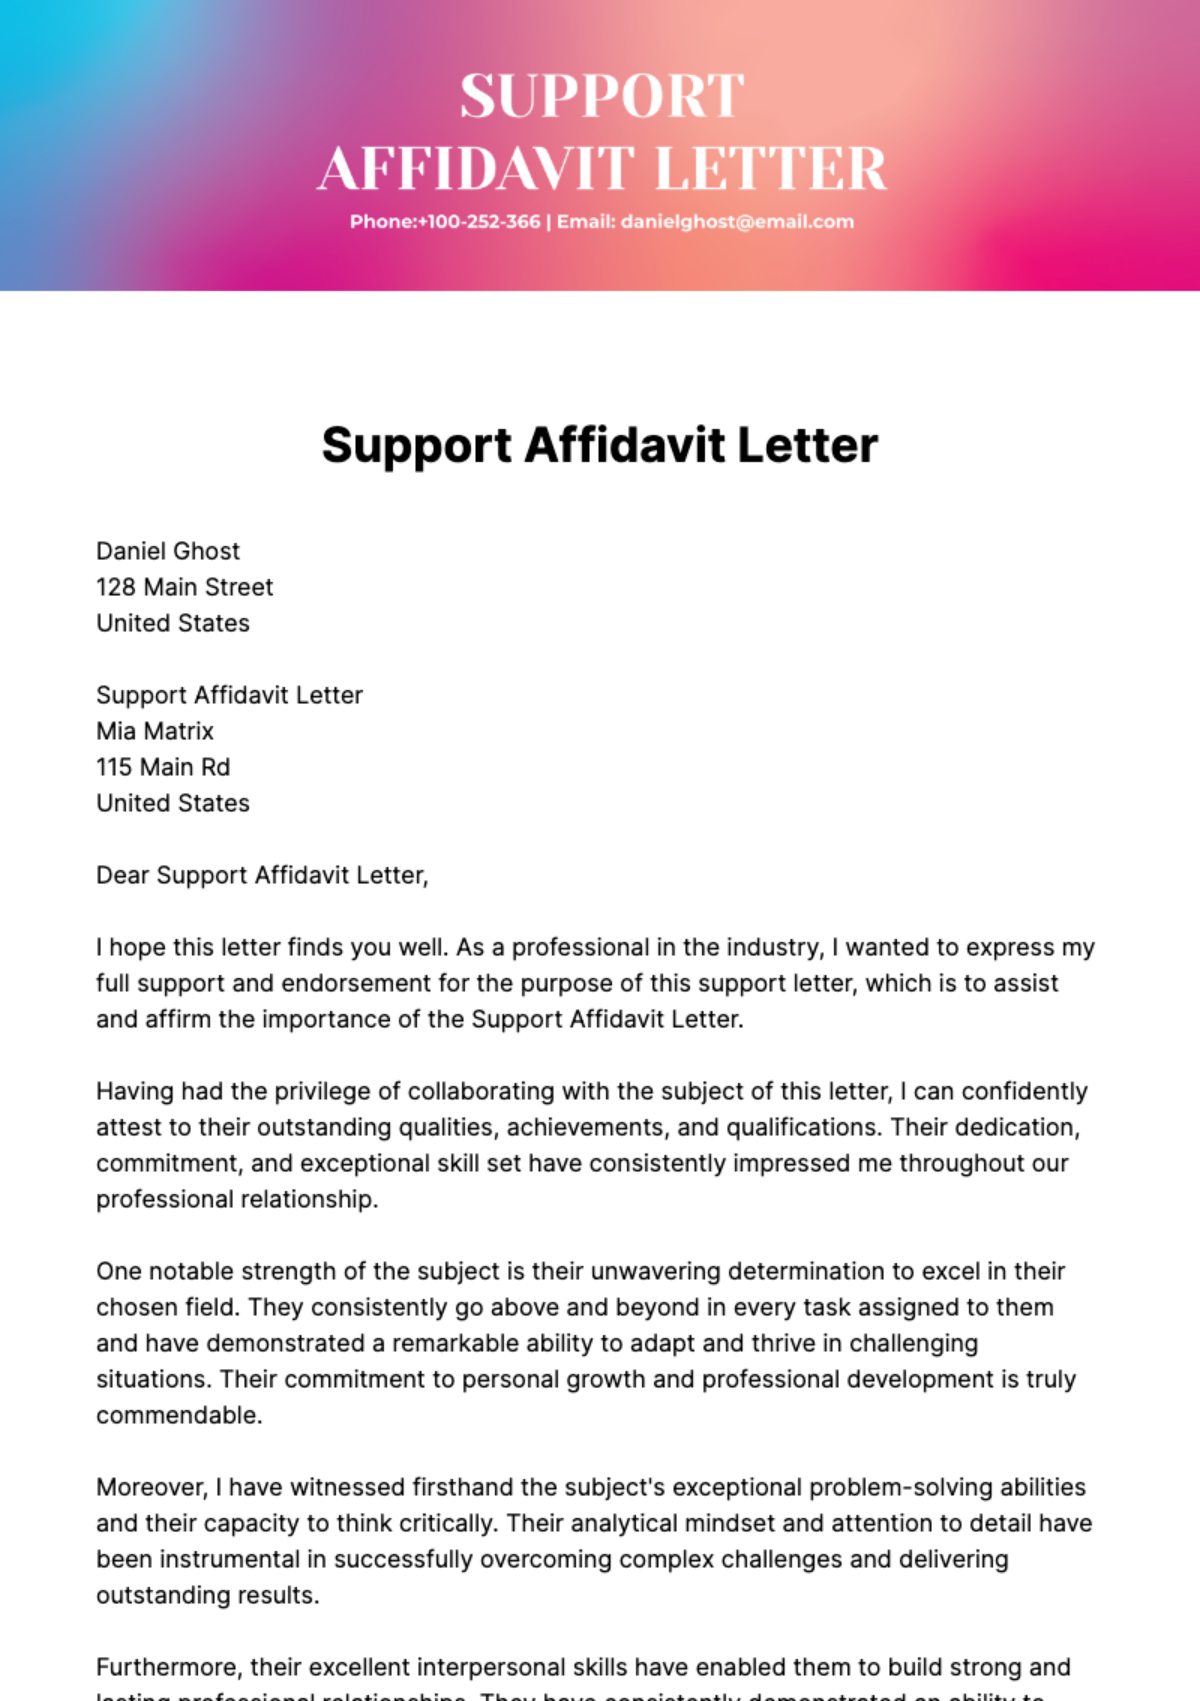 Free Support Affidavit Letter Template